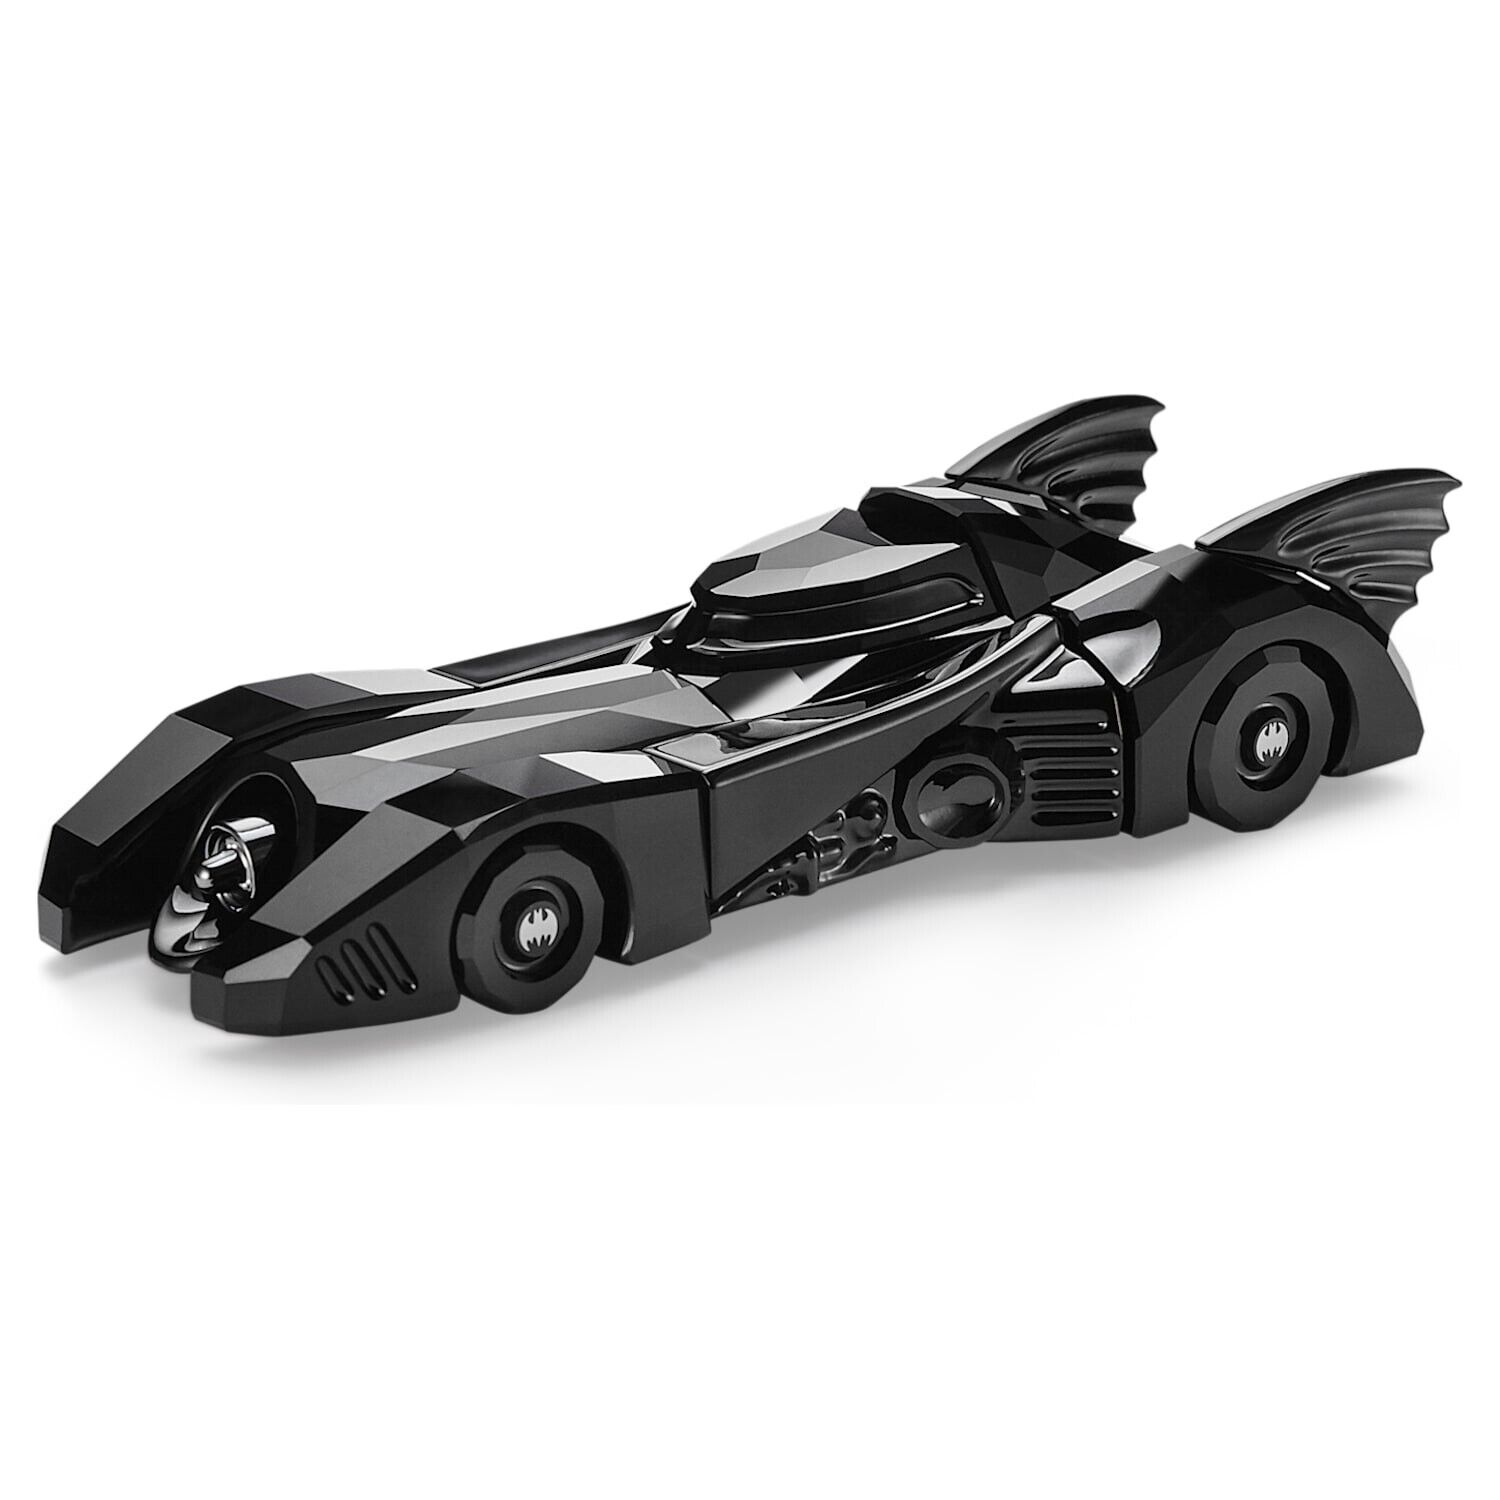 DEFECTIVE Swarovski Batmobile 5492733 Unisex Figurine Black One Size Crystal